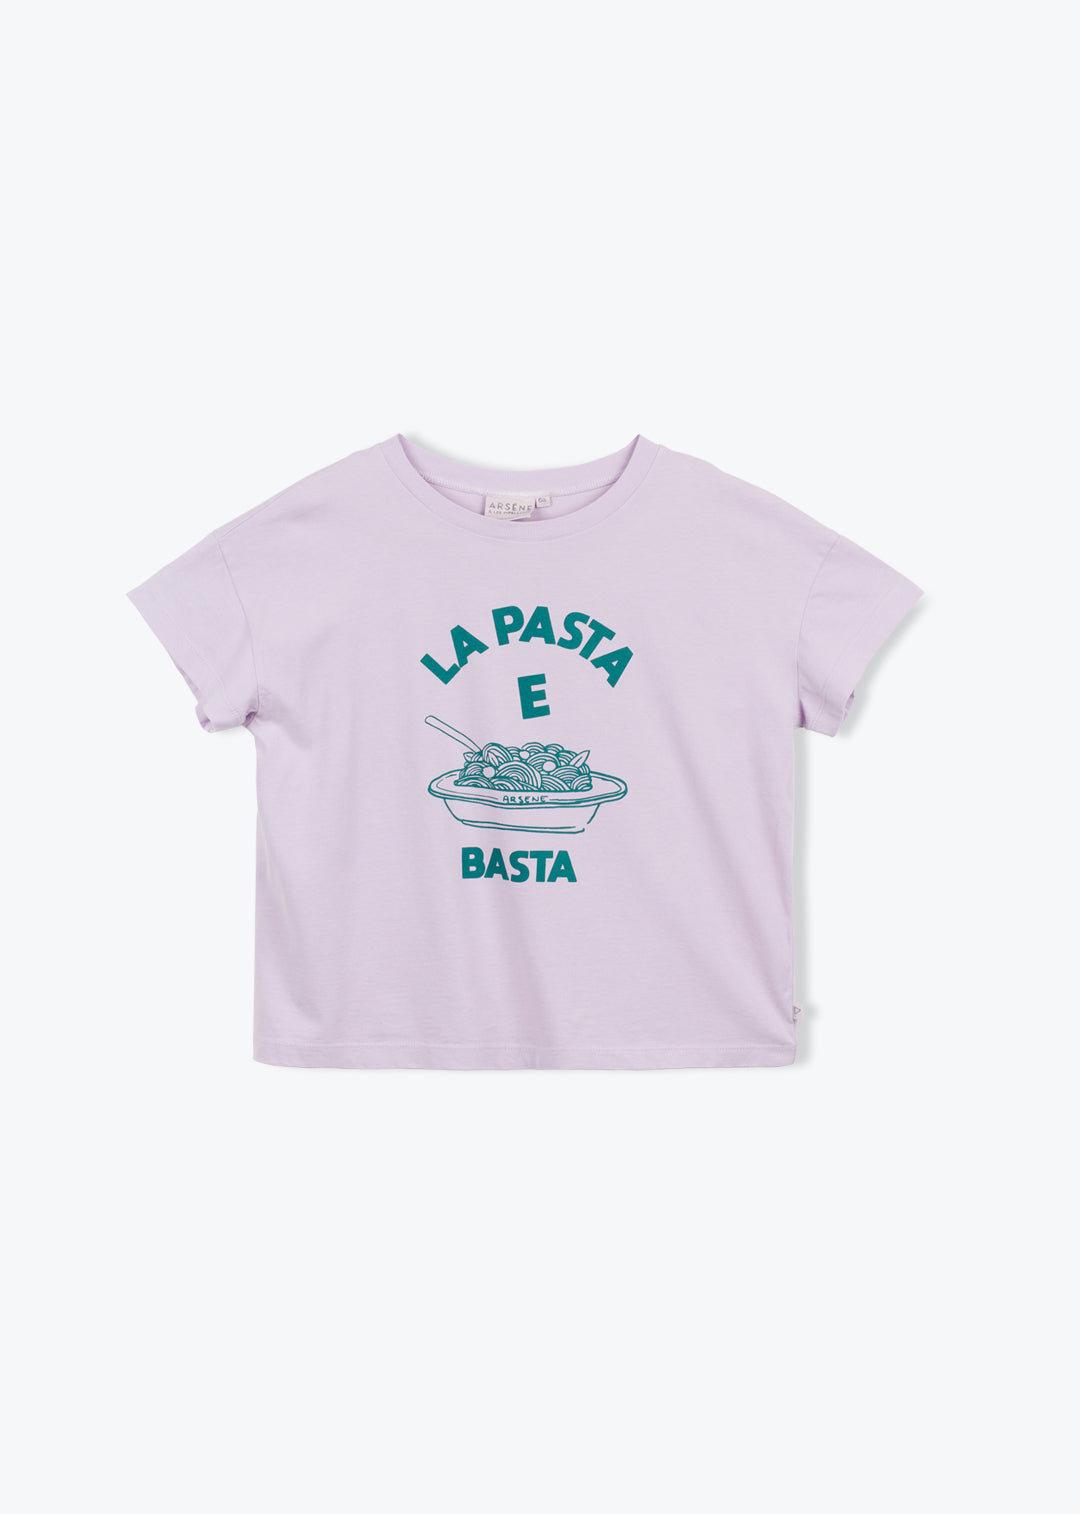 T-Shirt Boy Pasta E Basta Lavander Fabrizio - قميص